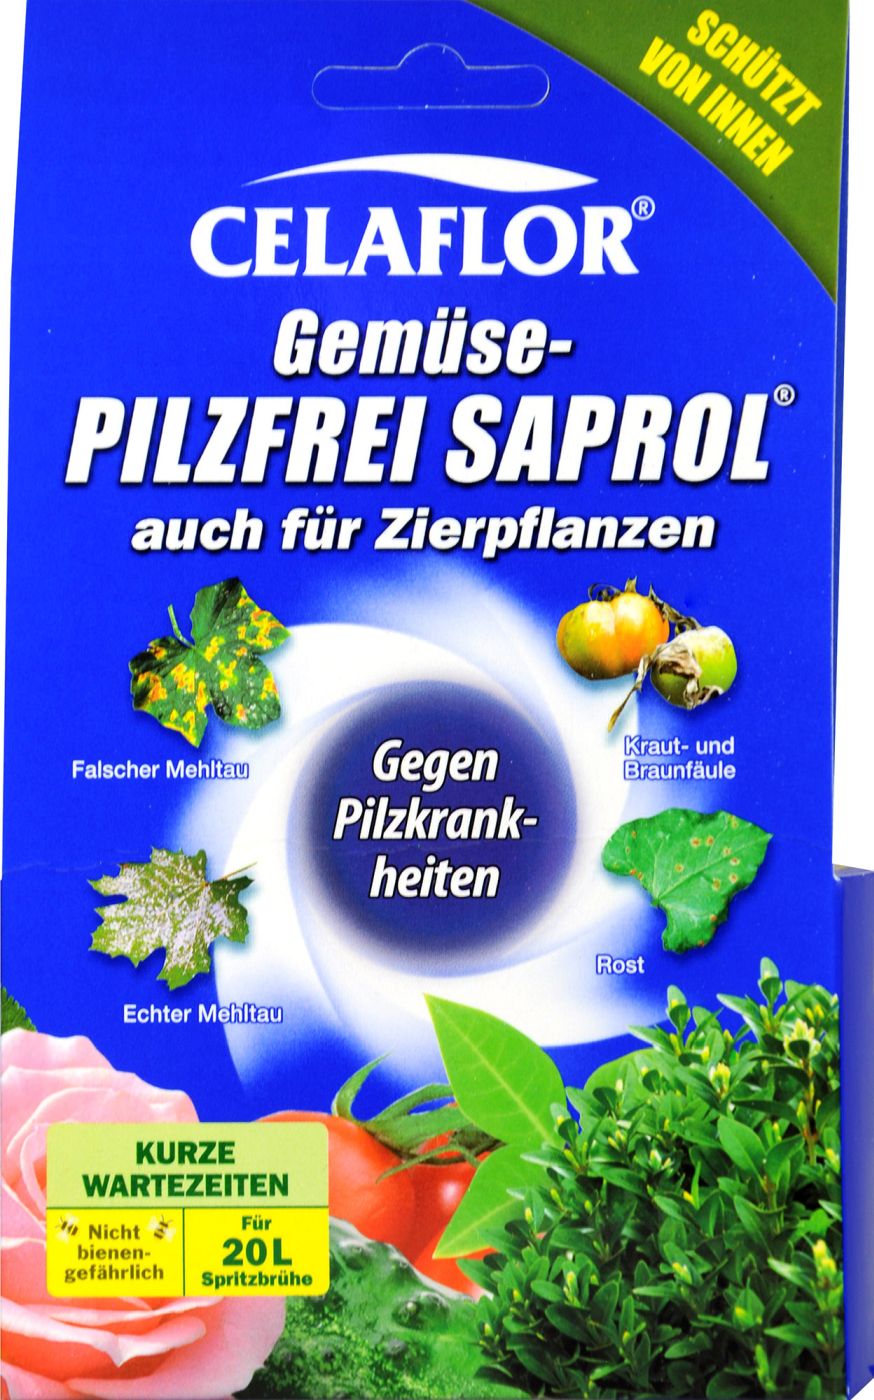 Celaflor Gemüse-Pilzfrei Saprol - 16 ml